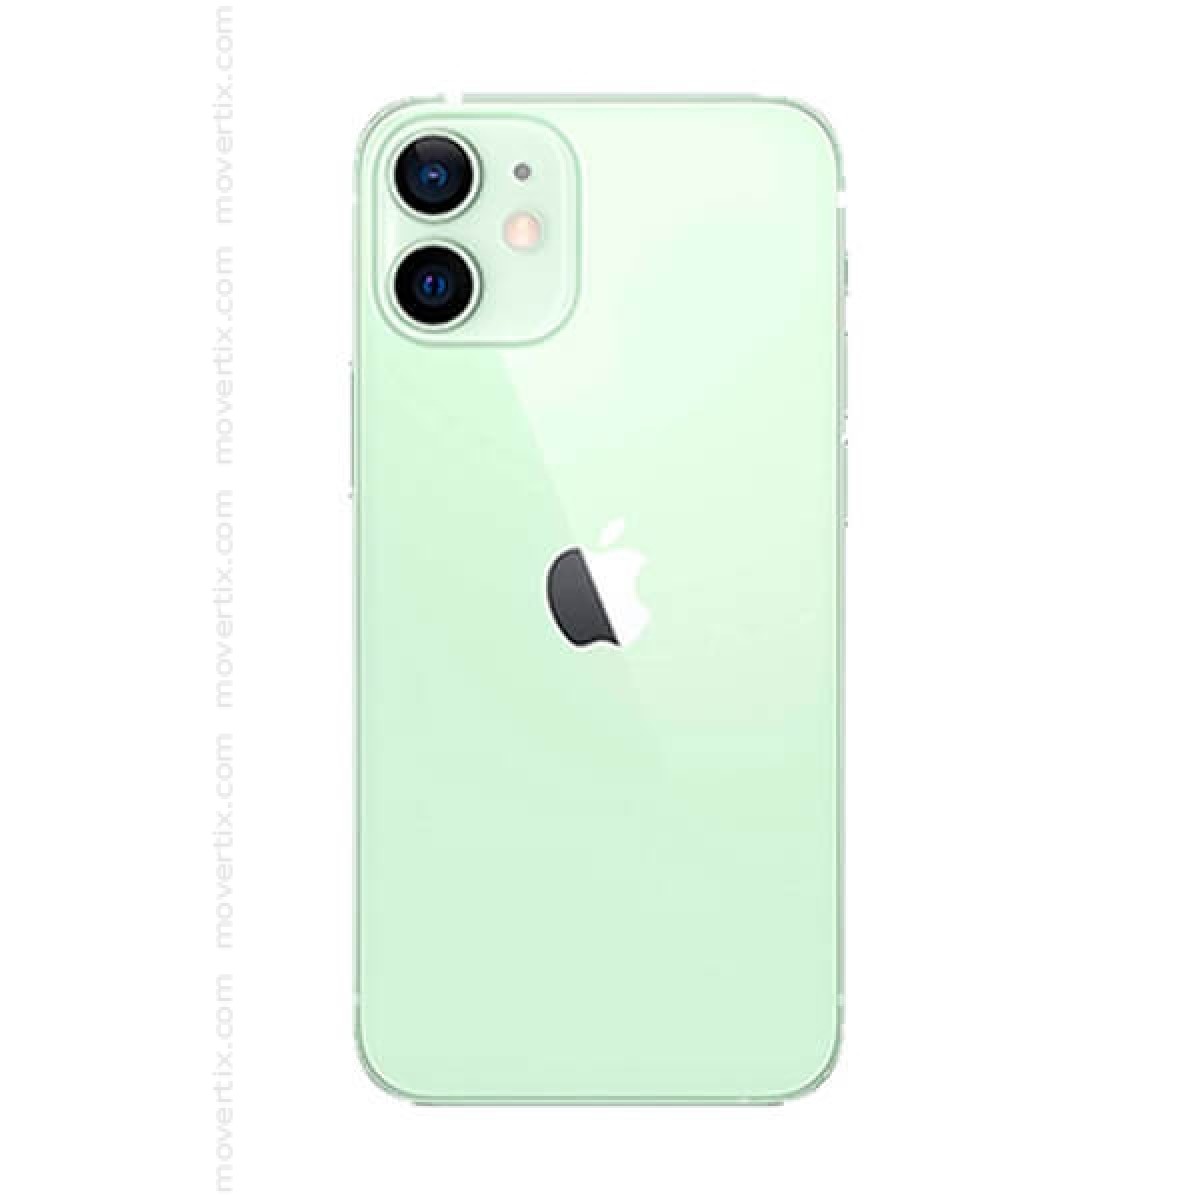 iPhone 12 mini Green 128GB (194252016176) | Movertix Mobile Phones Shop